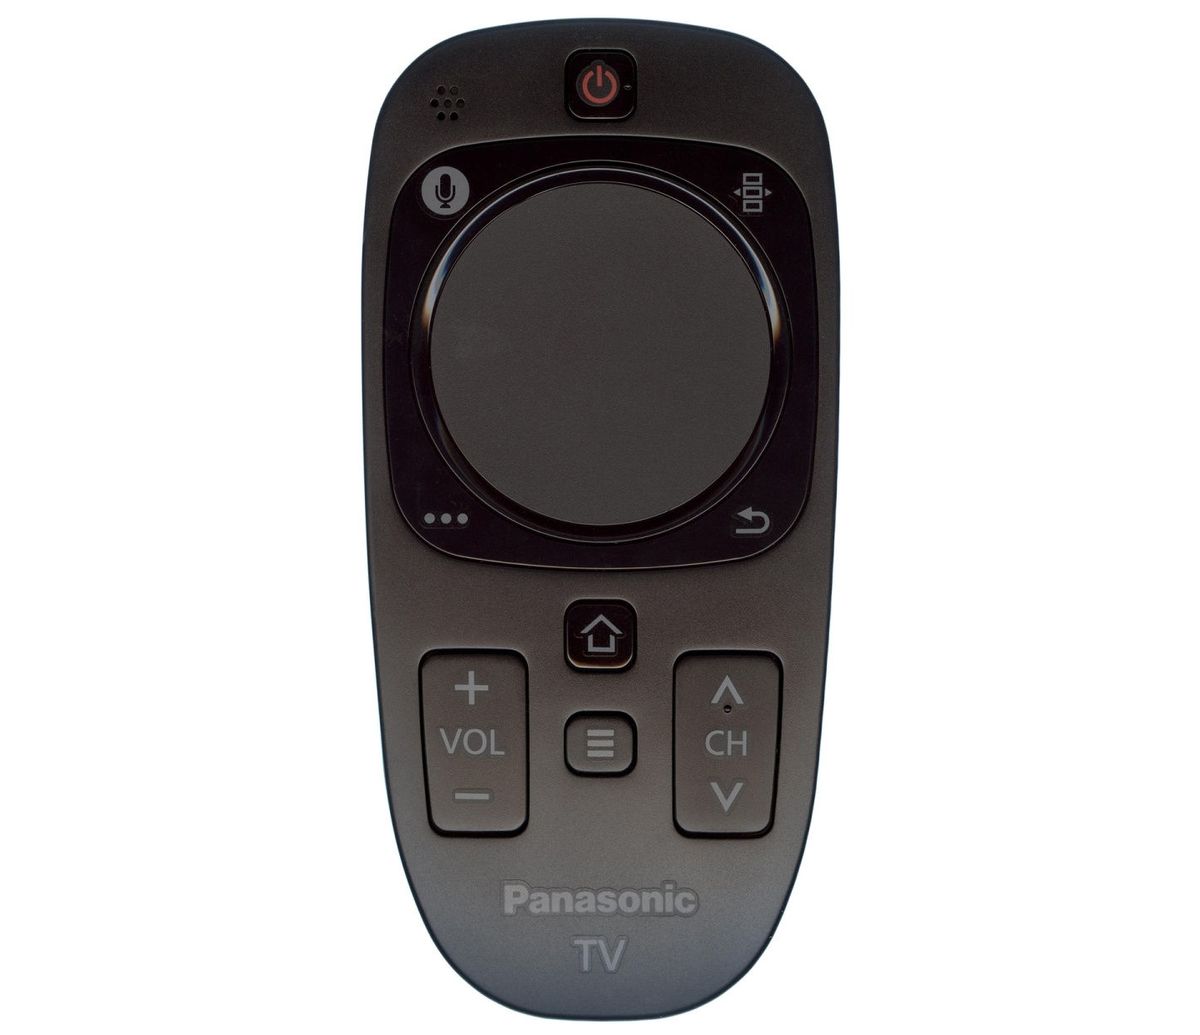 PANASONIC N2QAYB001094 + TV control (mini TV) - mando a distancia duplicado  - $18.0 : REMOTE CONTROL WORLD